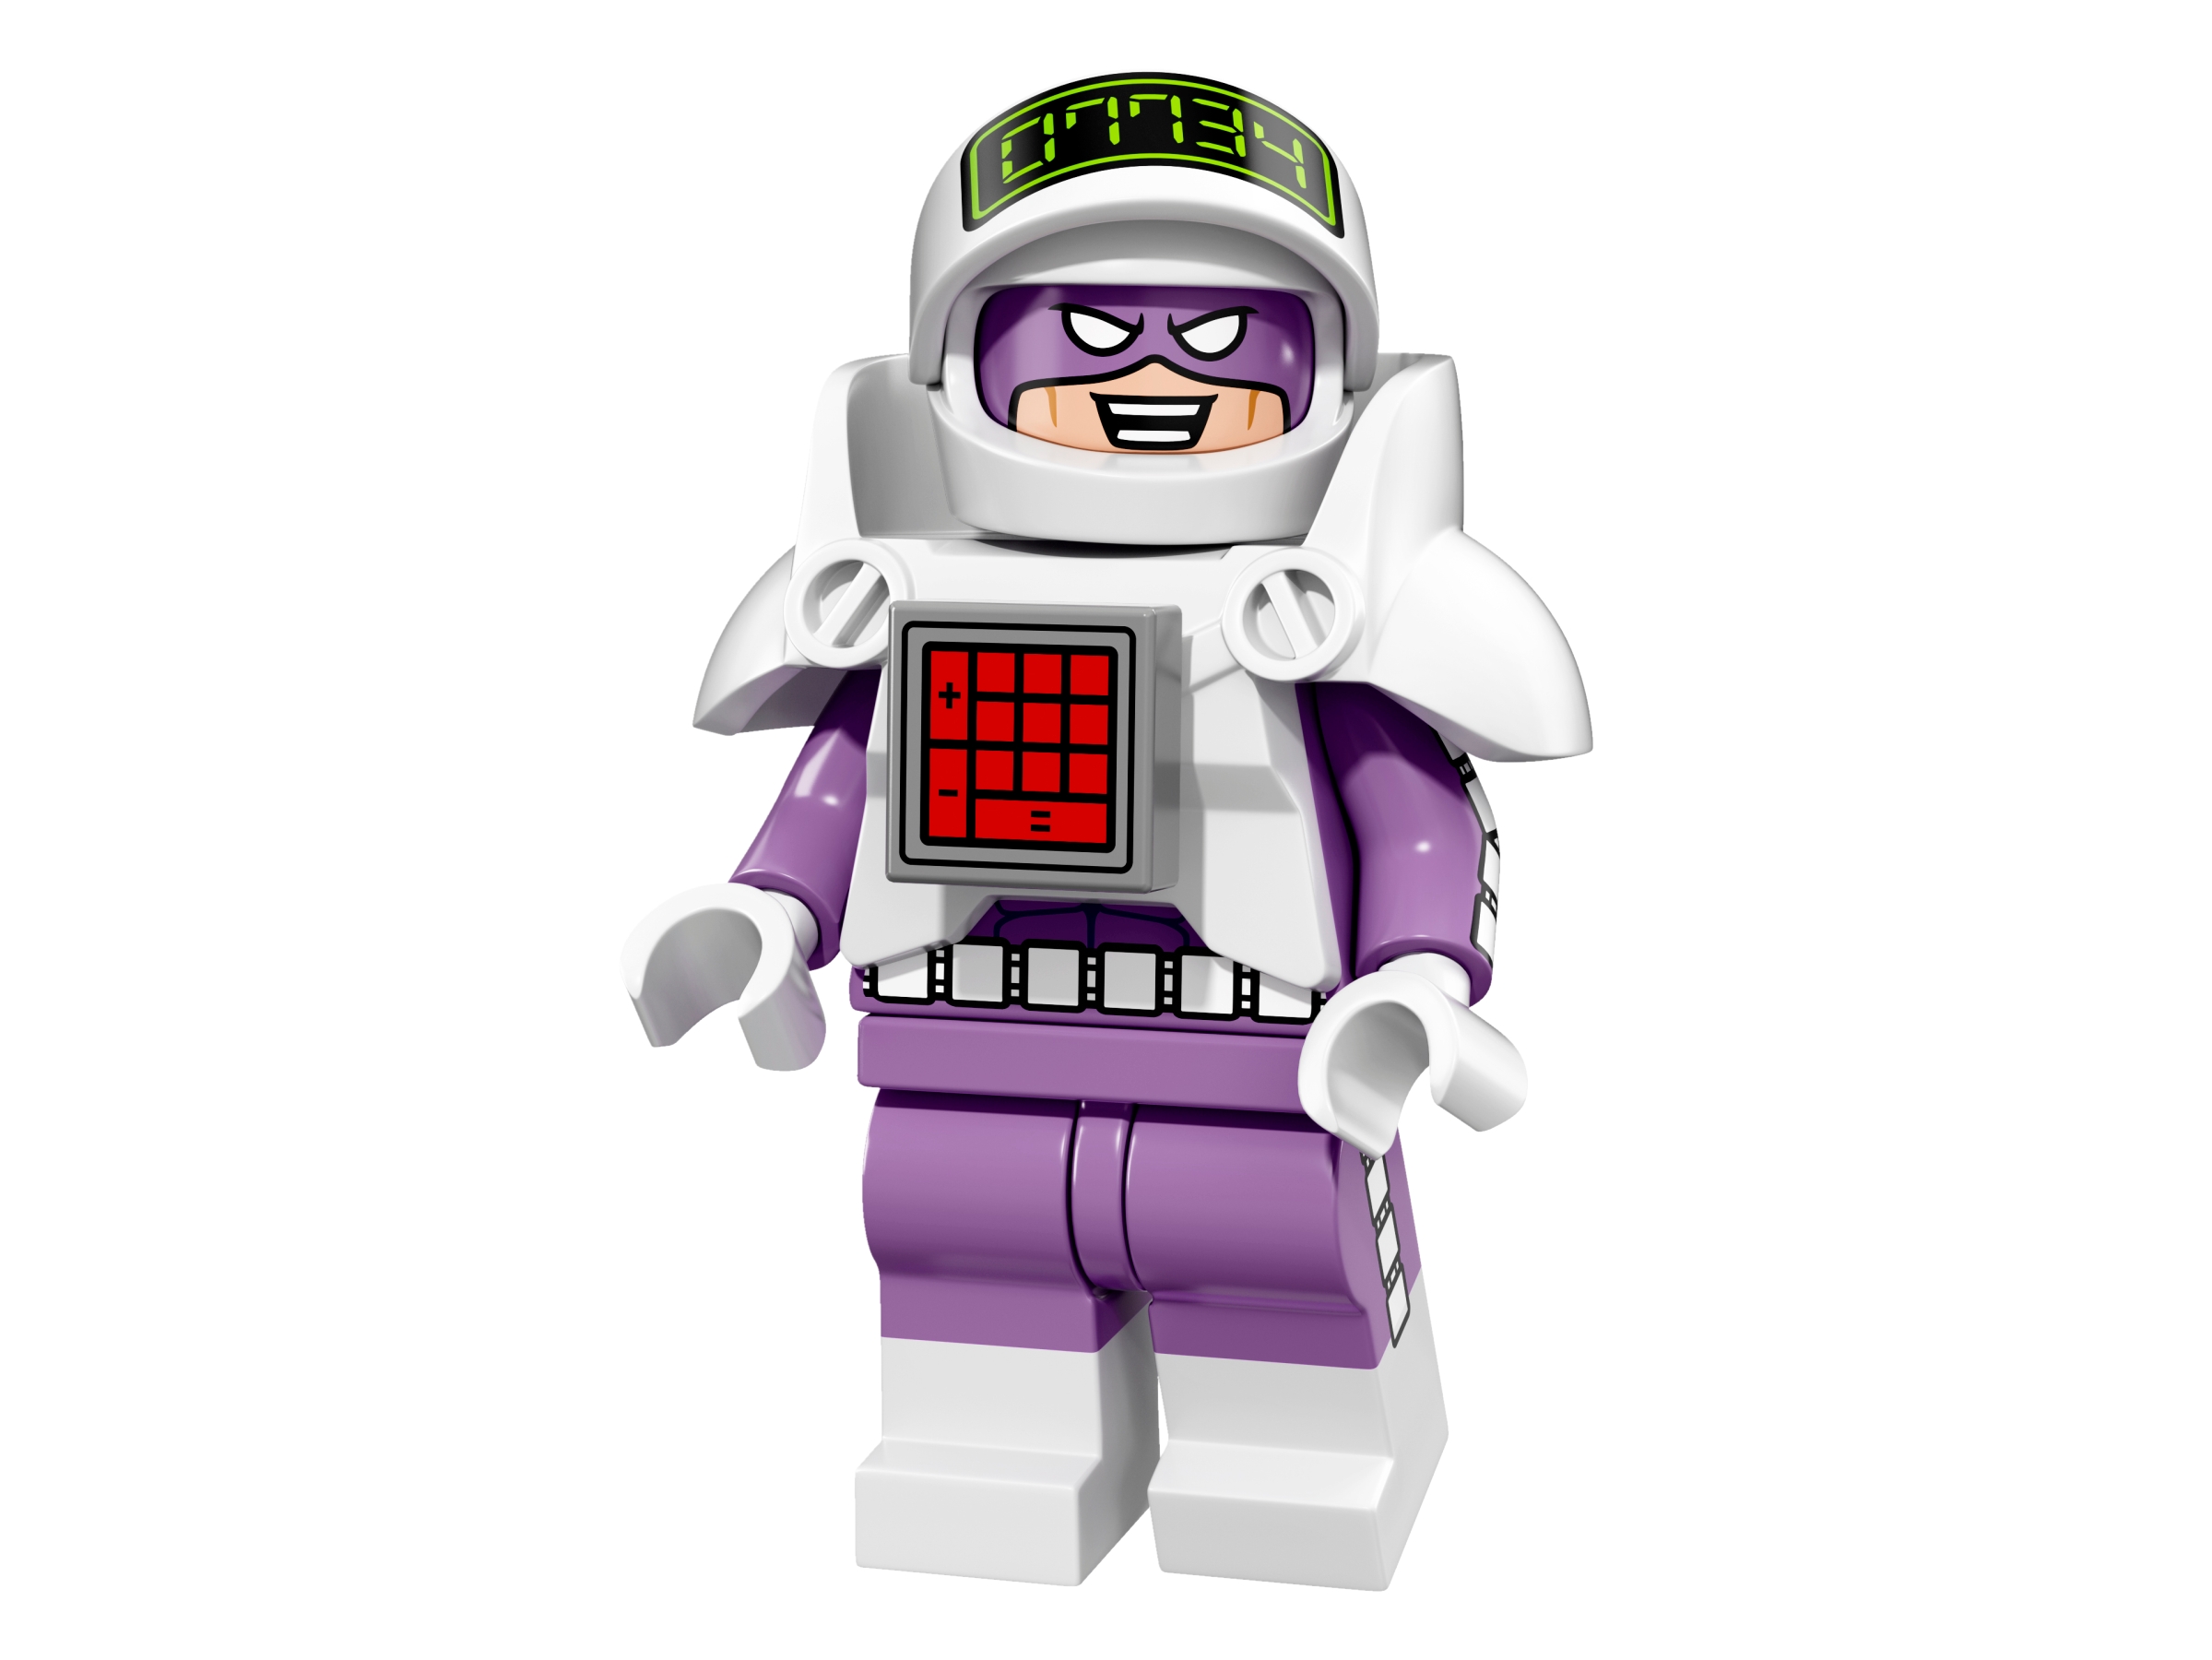 Lego Commissioner Gordon 71017 The LEGO Batman Movie Series 1 Minifigure 